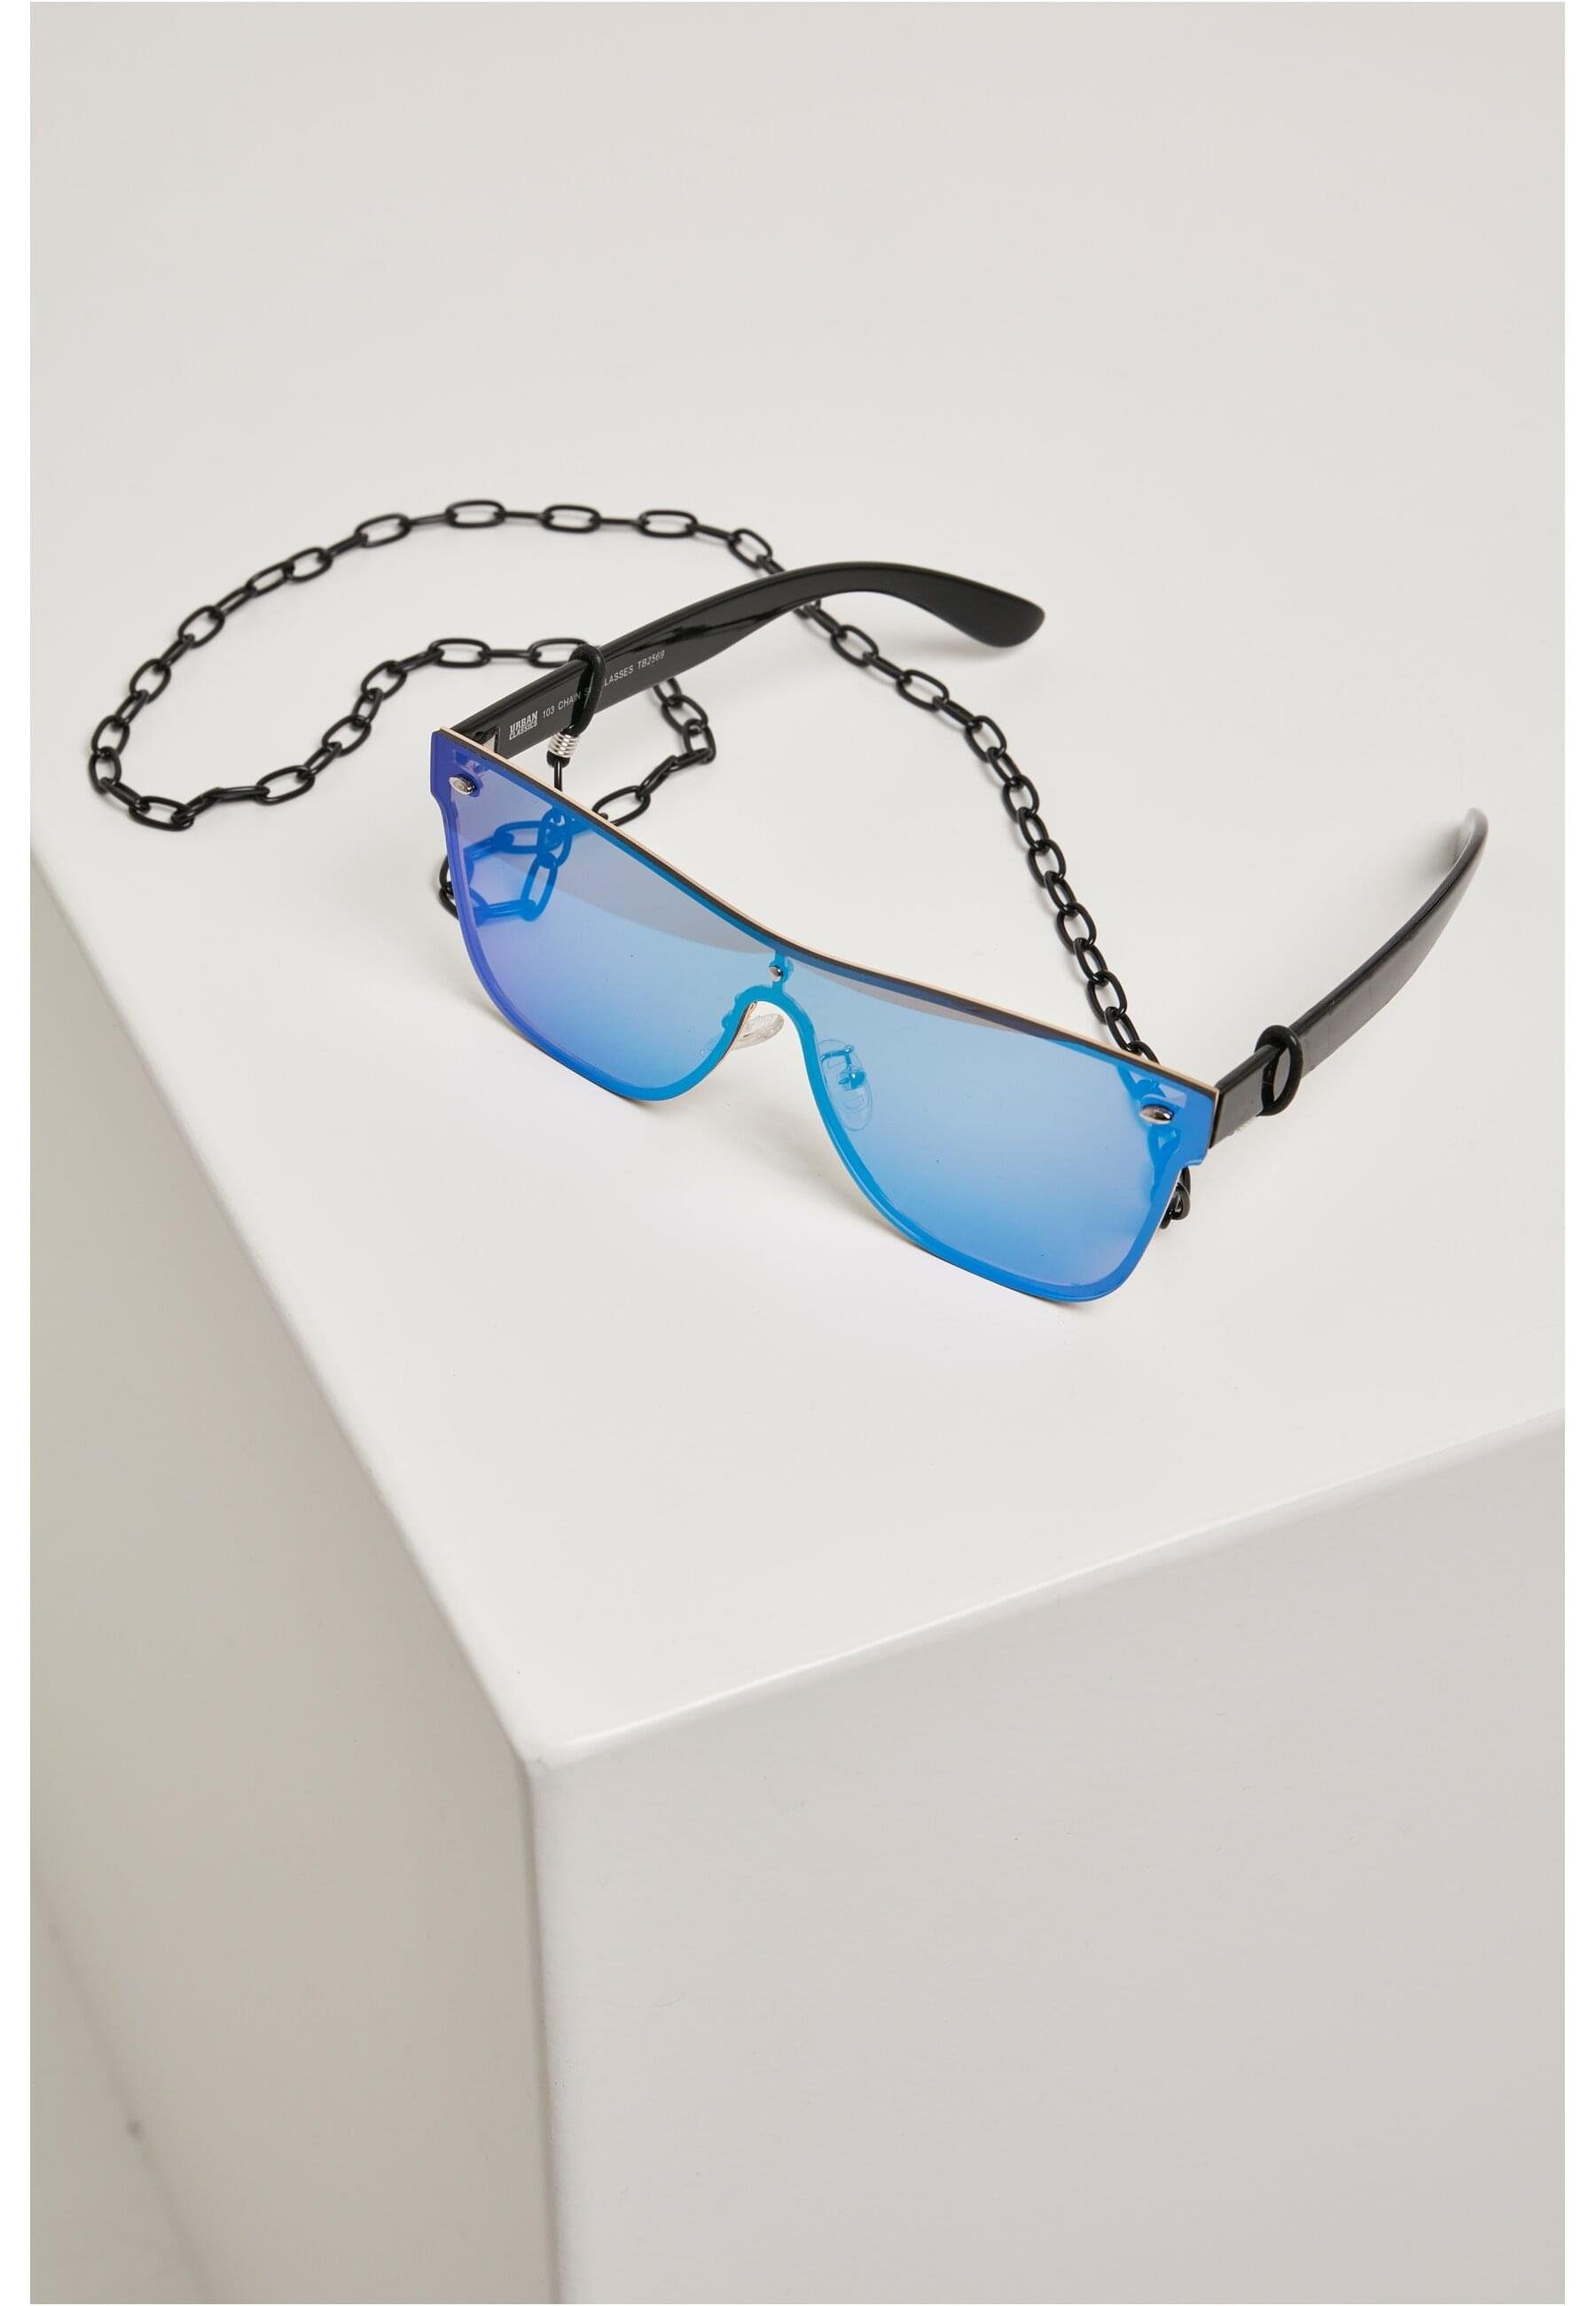 URBAN CLASSICS Sonnenbrille Unisex 103 blk/blue Chain Sunglasses